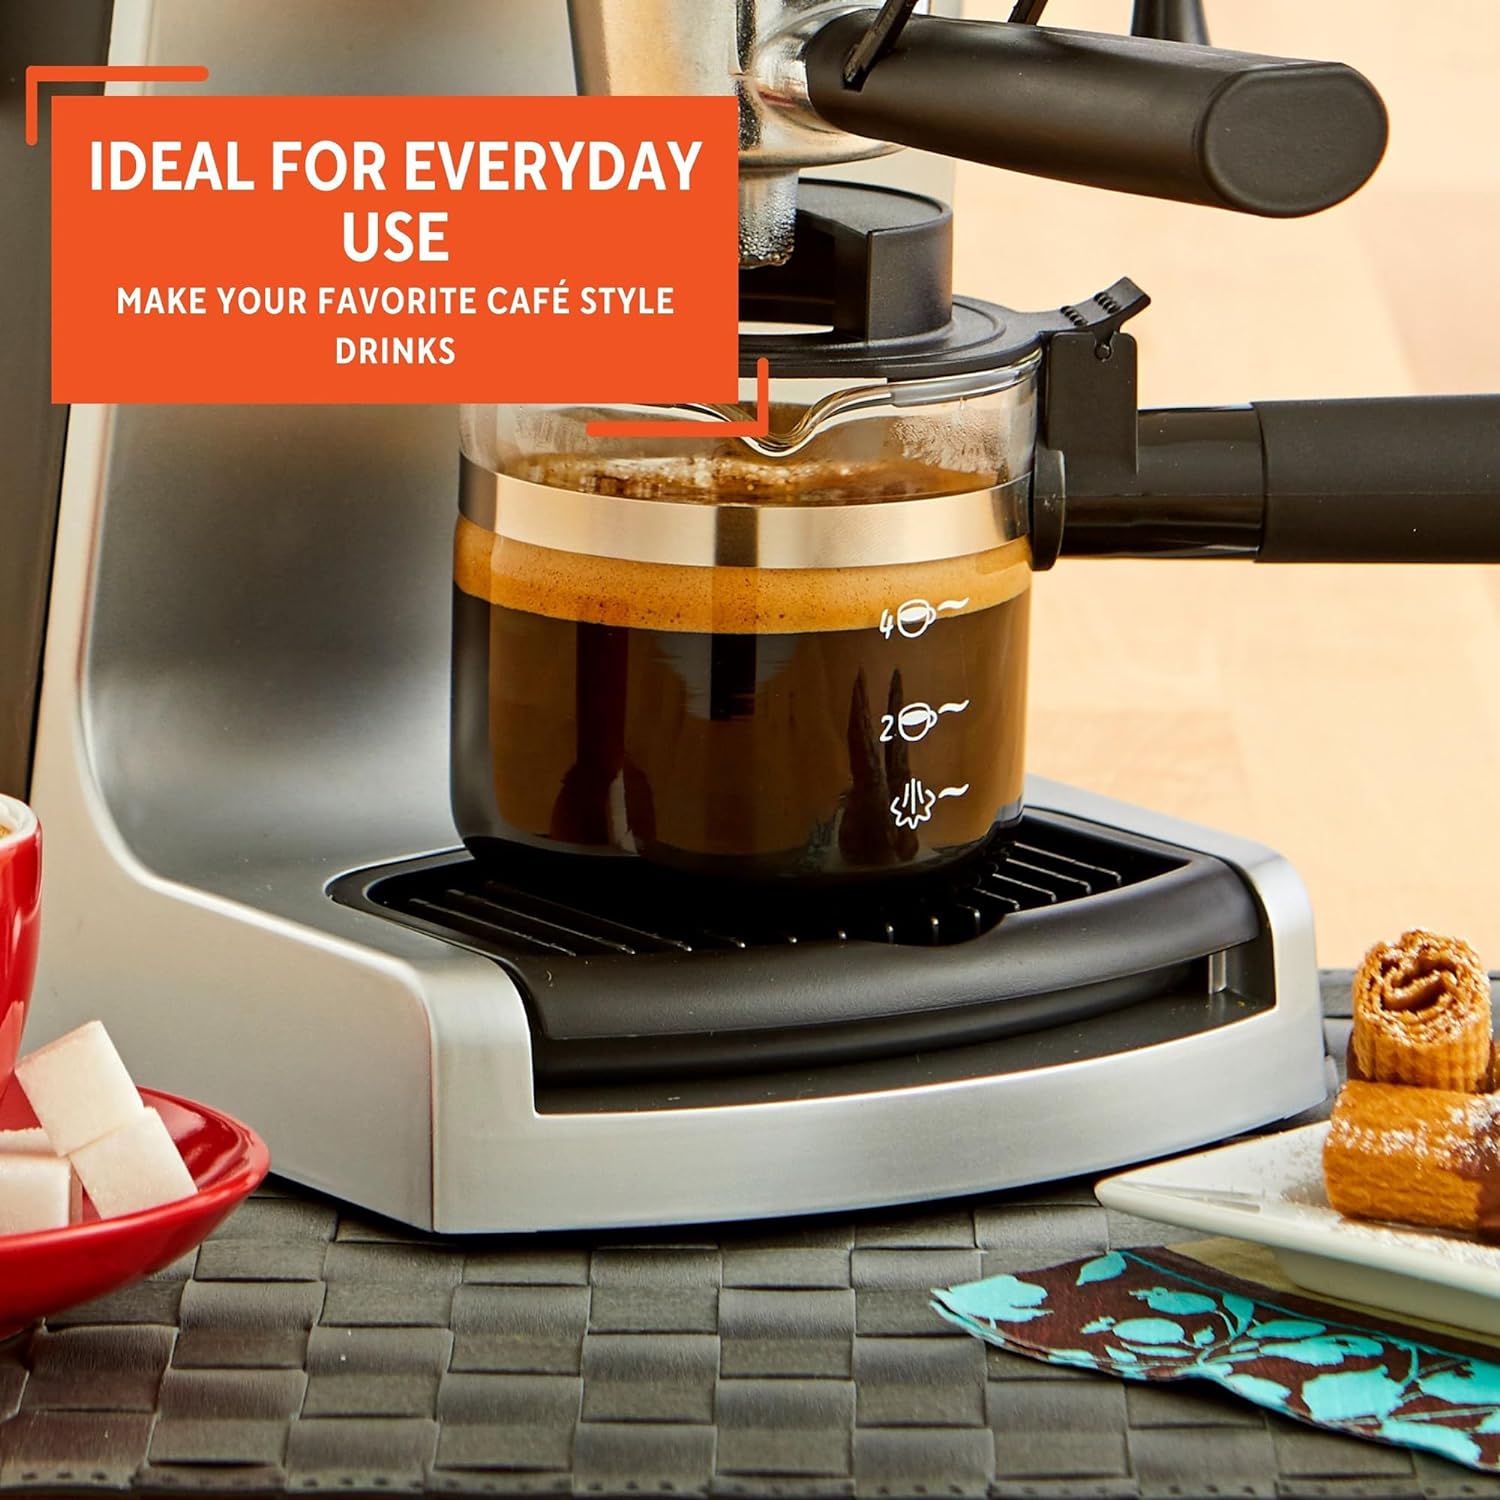 IMUSA USA Espresso Maker Carafe in Gift Box, Clear 4 Cup